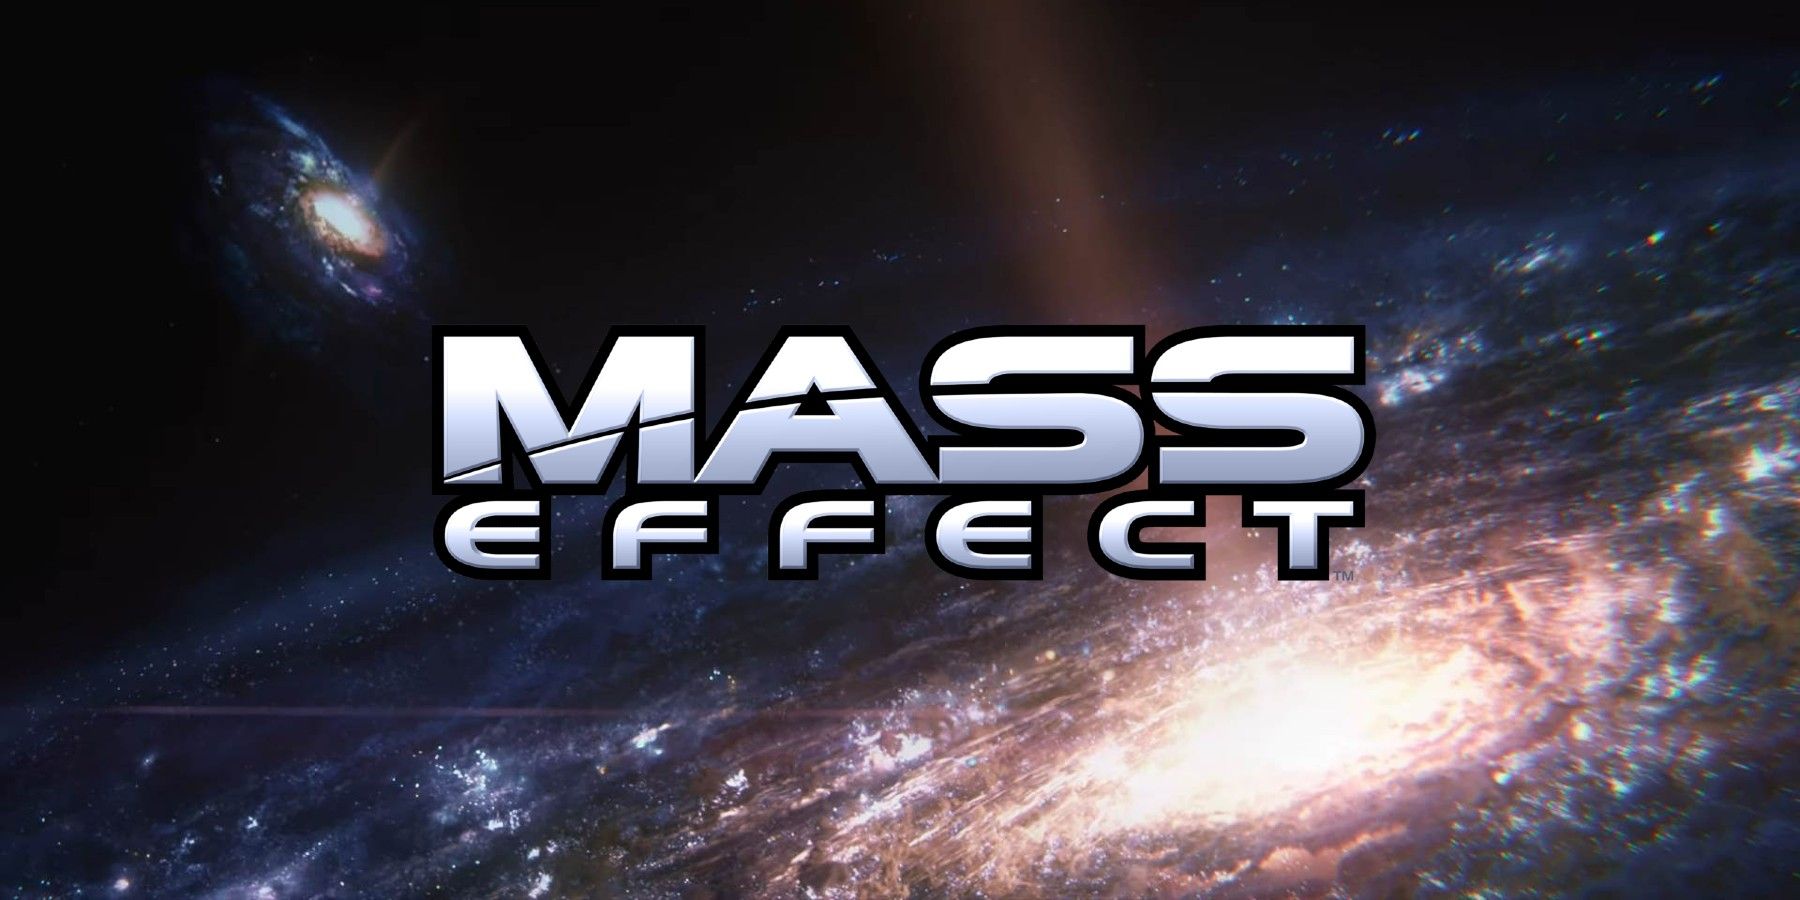 Mass Effect 4: إيجابيات وسلبيات نهجها المجرة المزدوجة